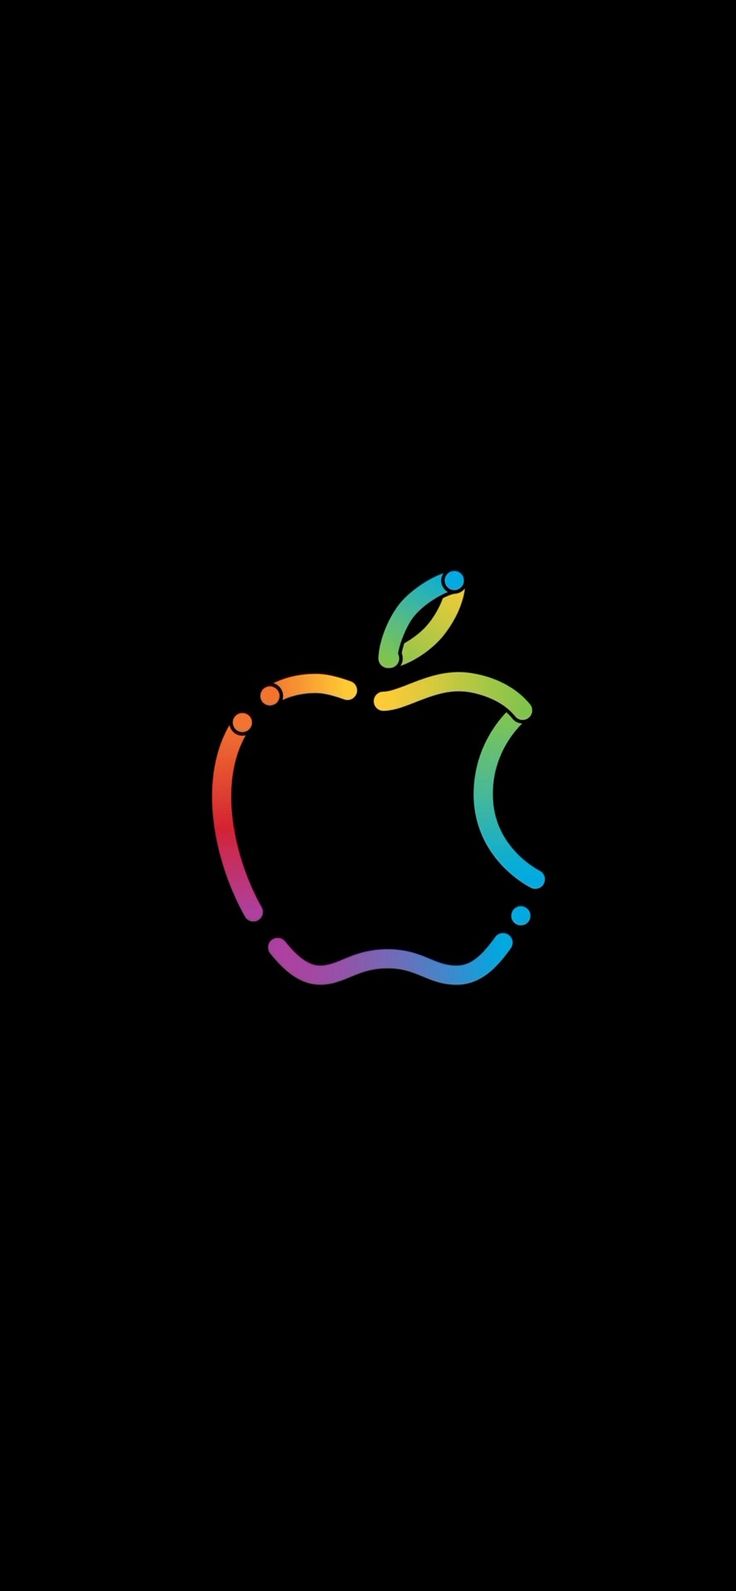 Apple Logo Animation iPhone 11 Promotional [LIVE Wallpaper] Central. Apple logo wallpaper iphone, Apple wallpaper iphone, Live wallpaper iphone